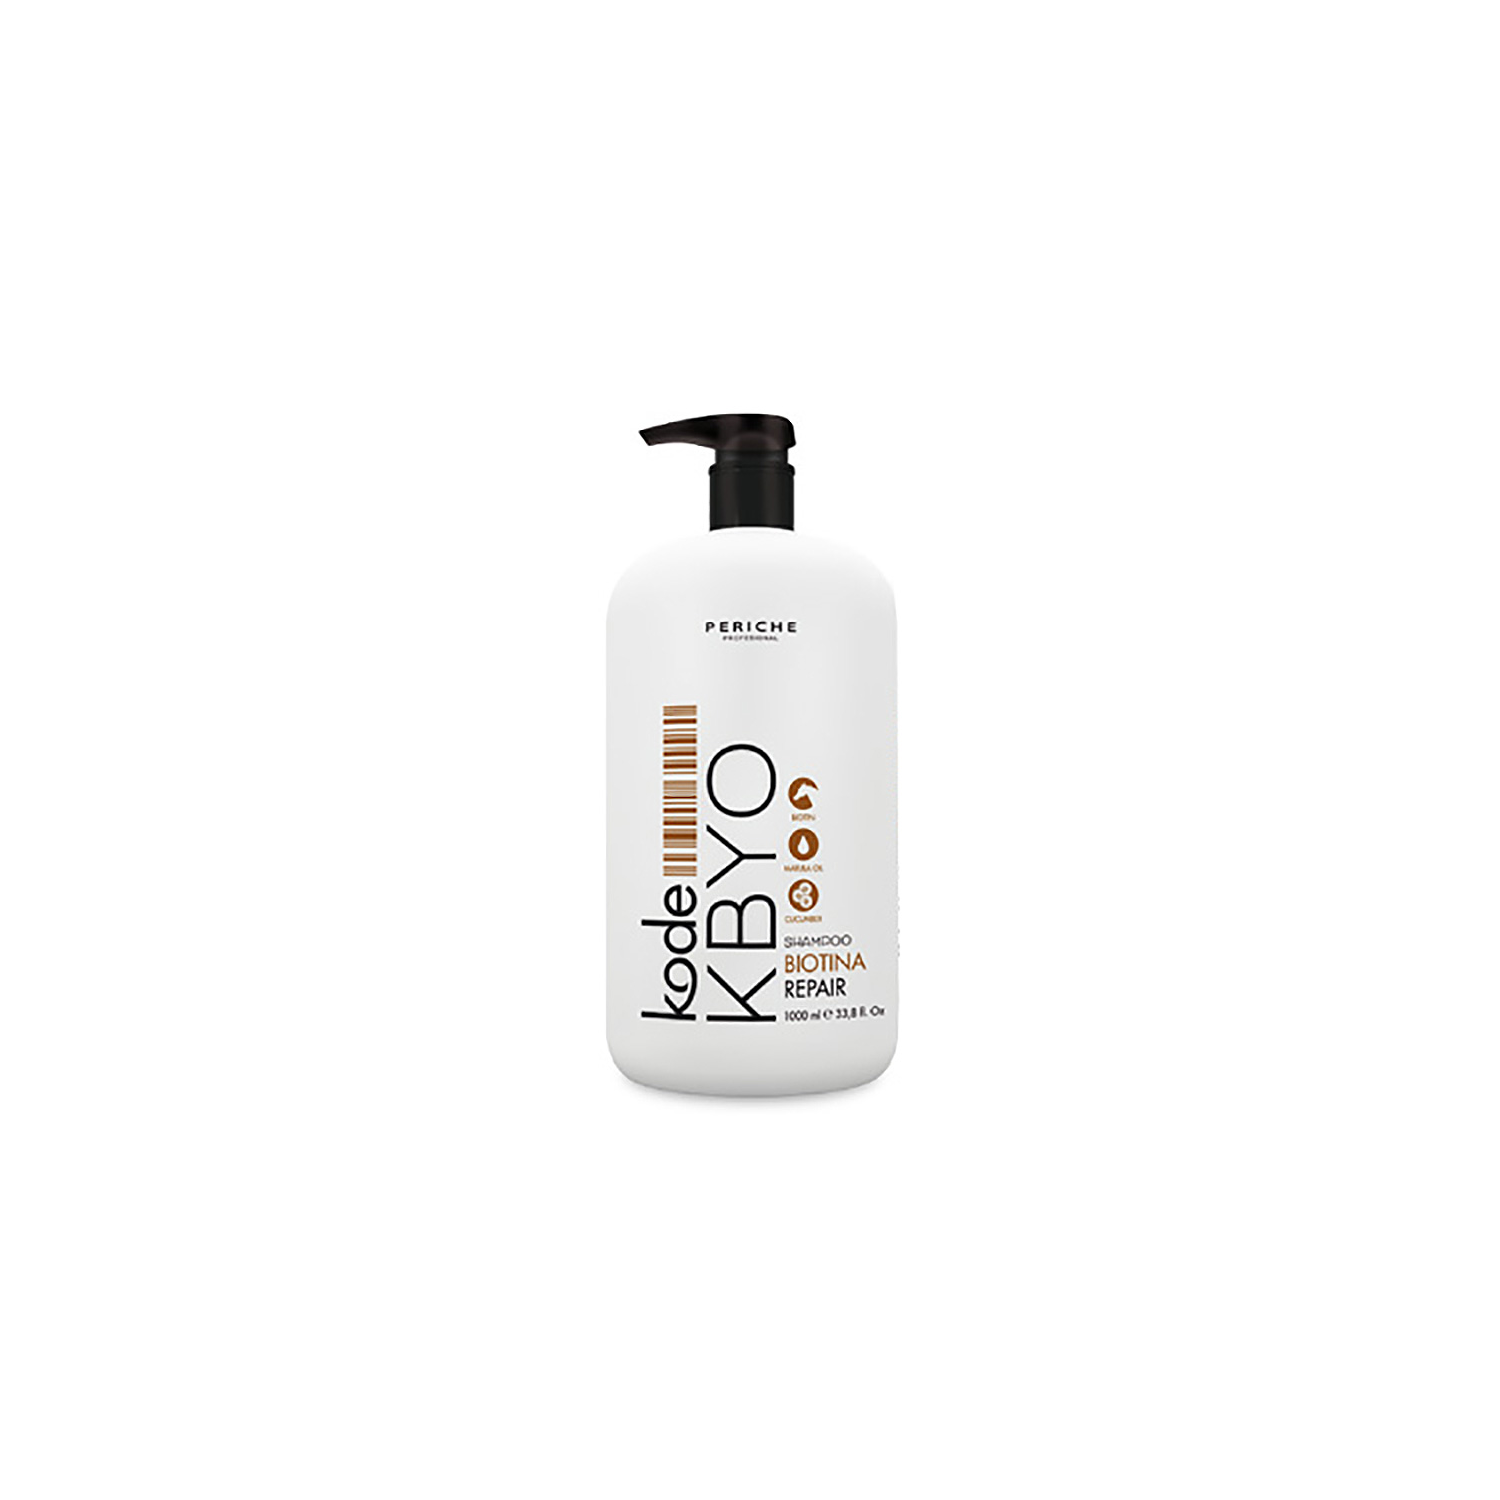 Periche Kode Biotina Shampoo 500 ml